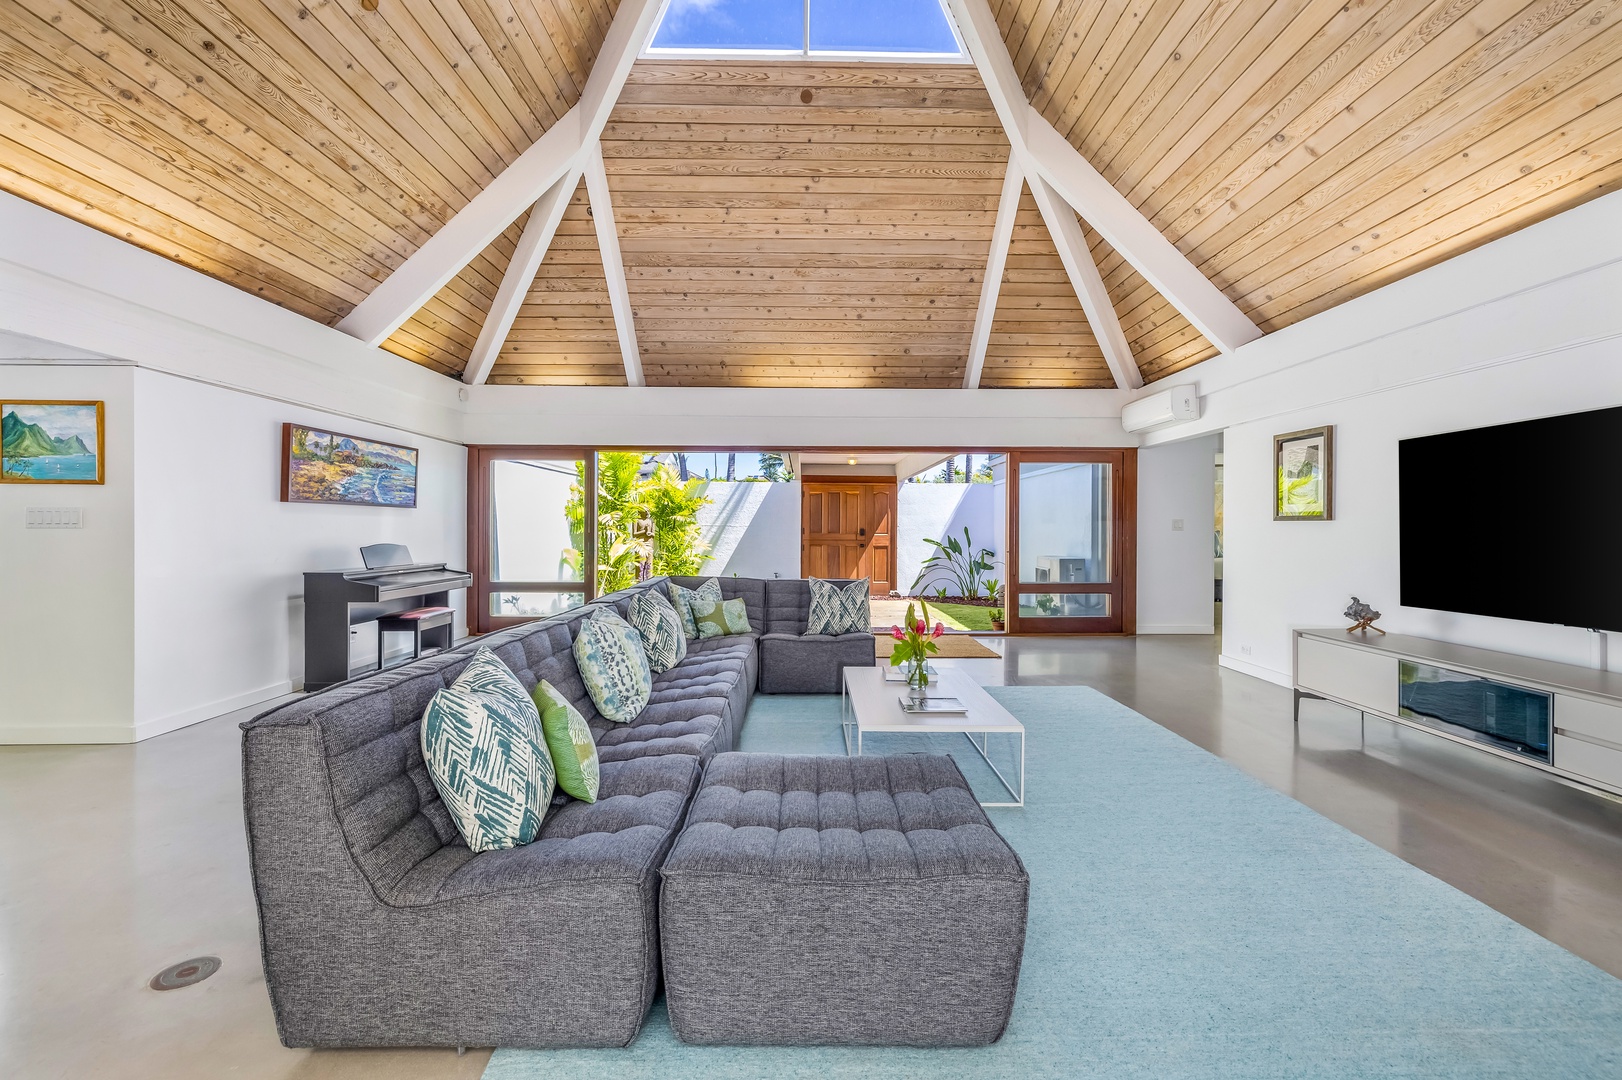 Kailua Vacation Rentals, Lokomaika'i Kailua - Living room with extra large sofa, perfect for the whole family to gather!